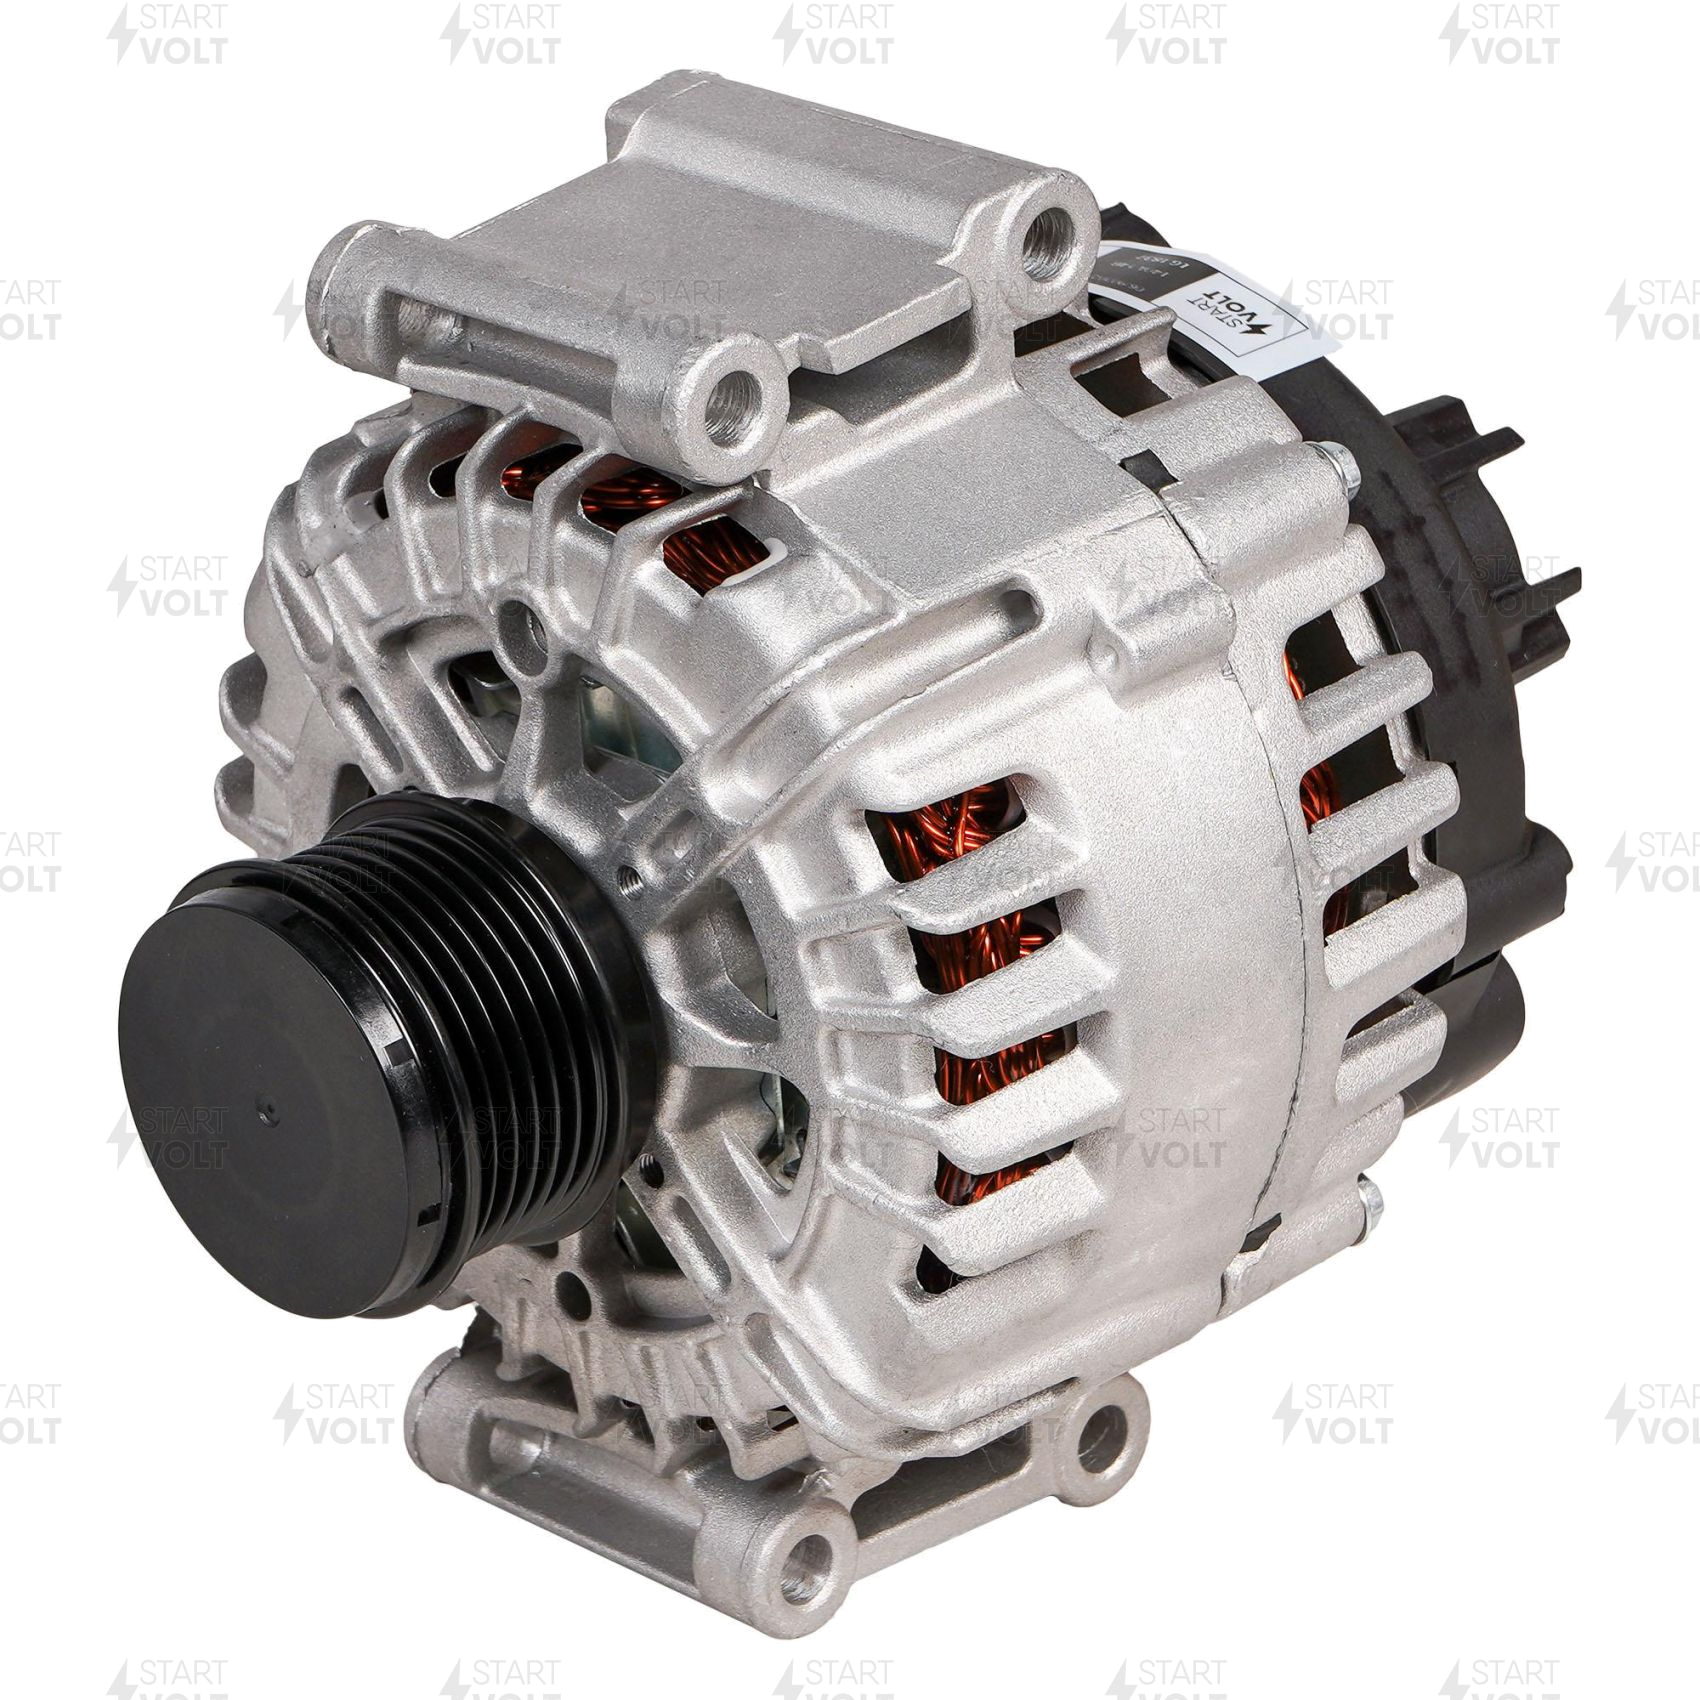 Volkswagen Tiguan (Тигуан) 2011 г . 2 литра 170 л.с. – АКБ аккумулятор генератор проверка, диагностика, монтаж (установка), демонтаж (снятие)